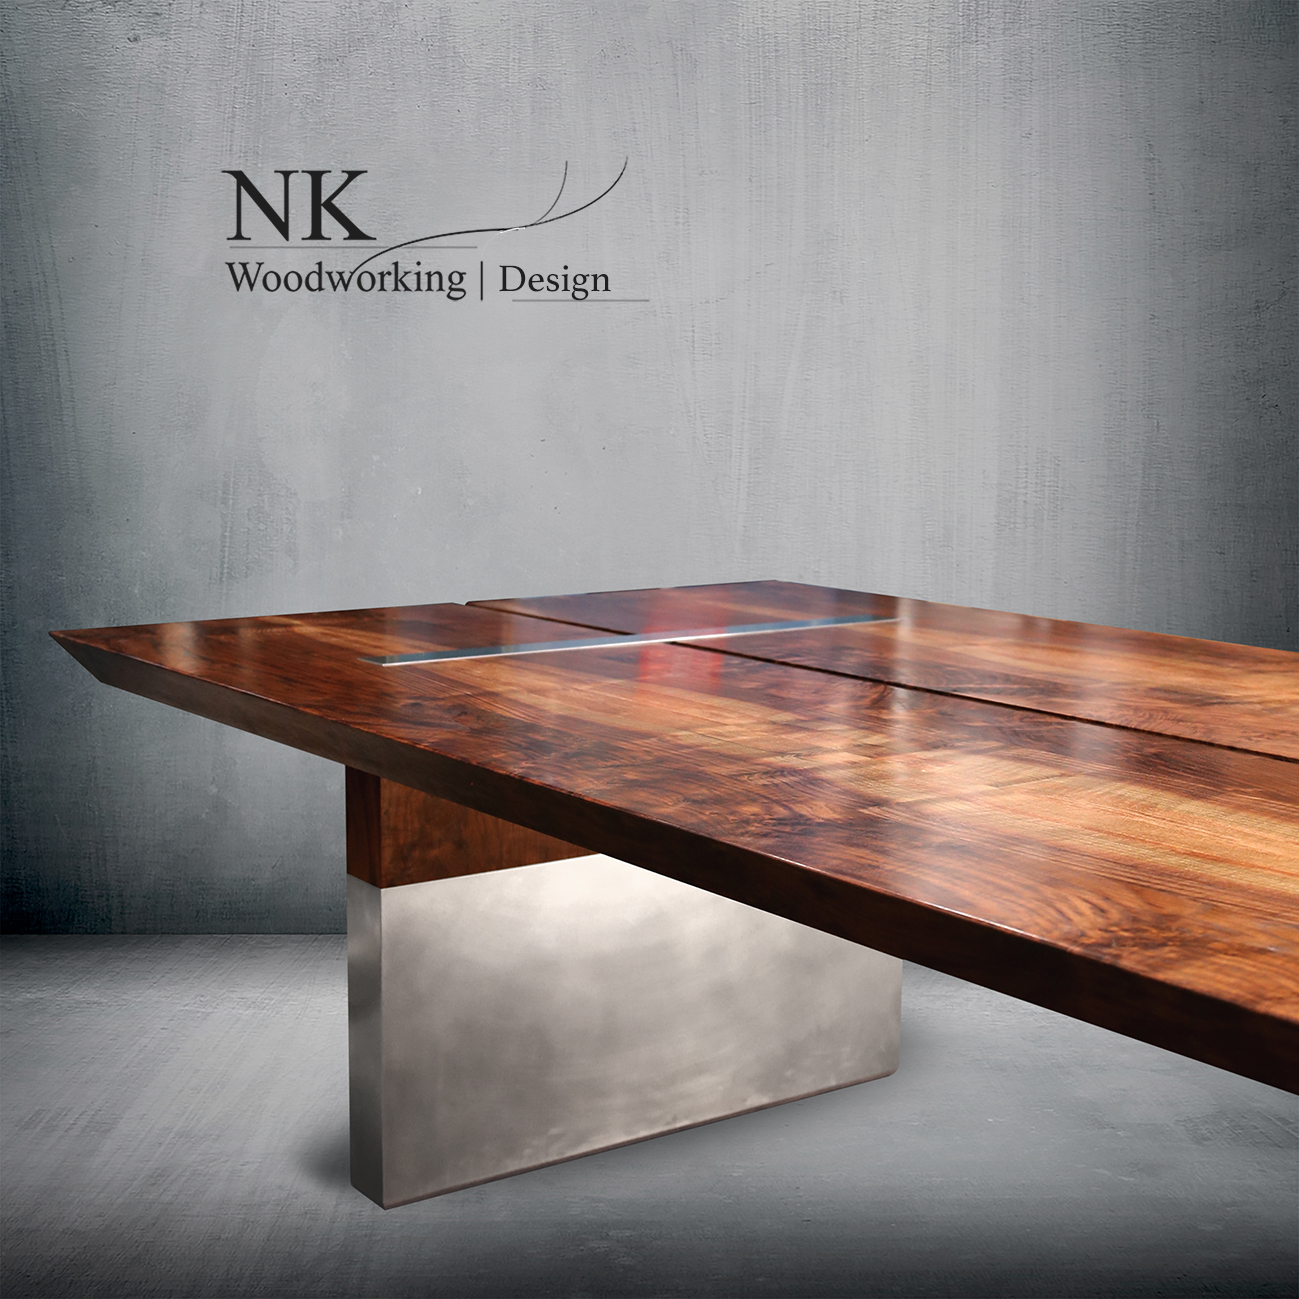 Nk Woodworking Design